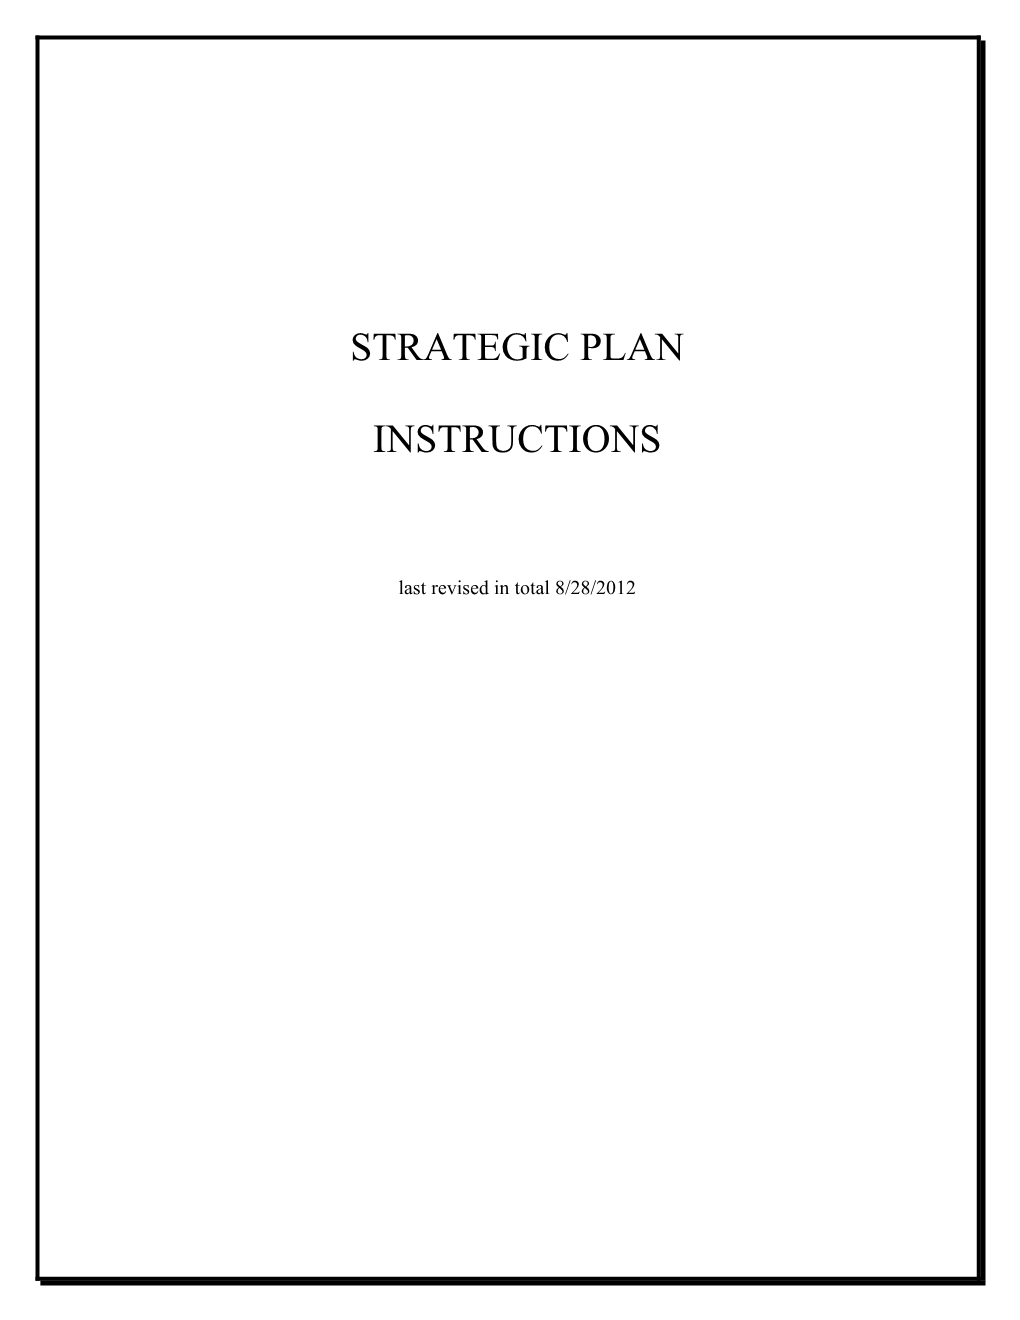 Strategic Plan Instructions FY 2013-18